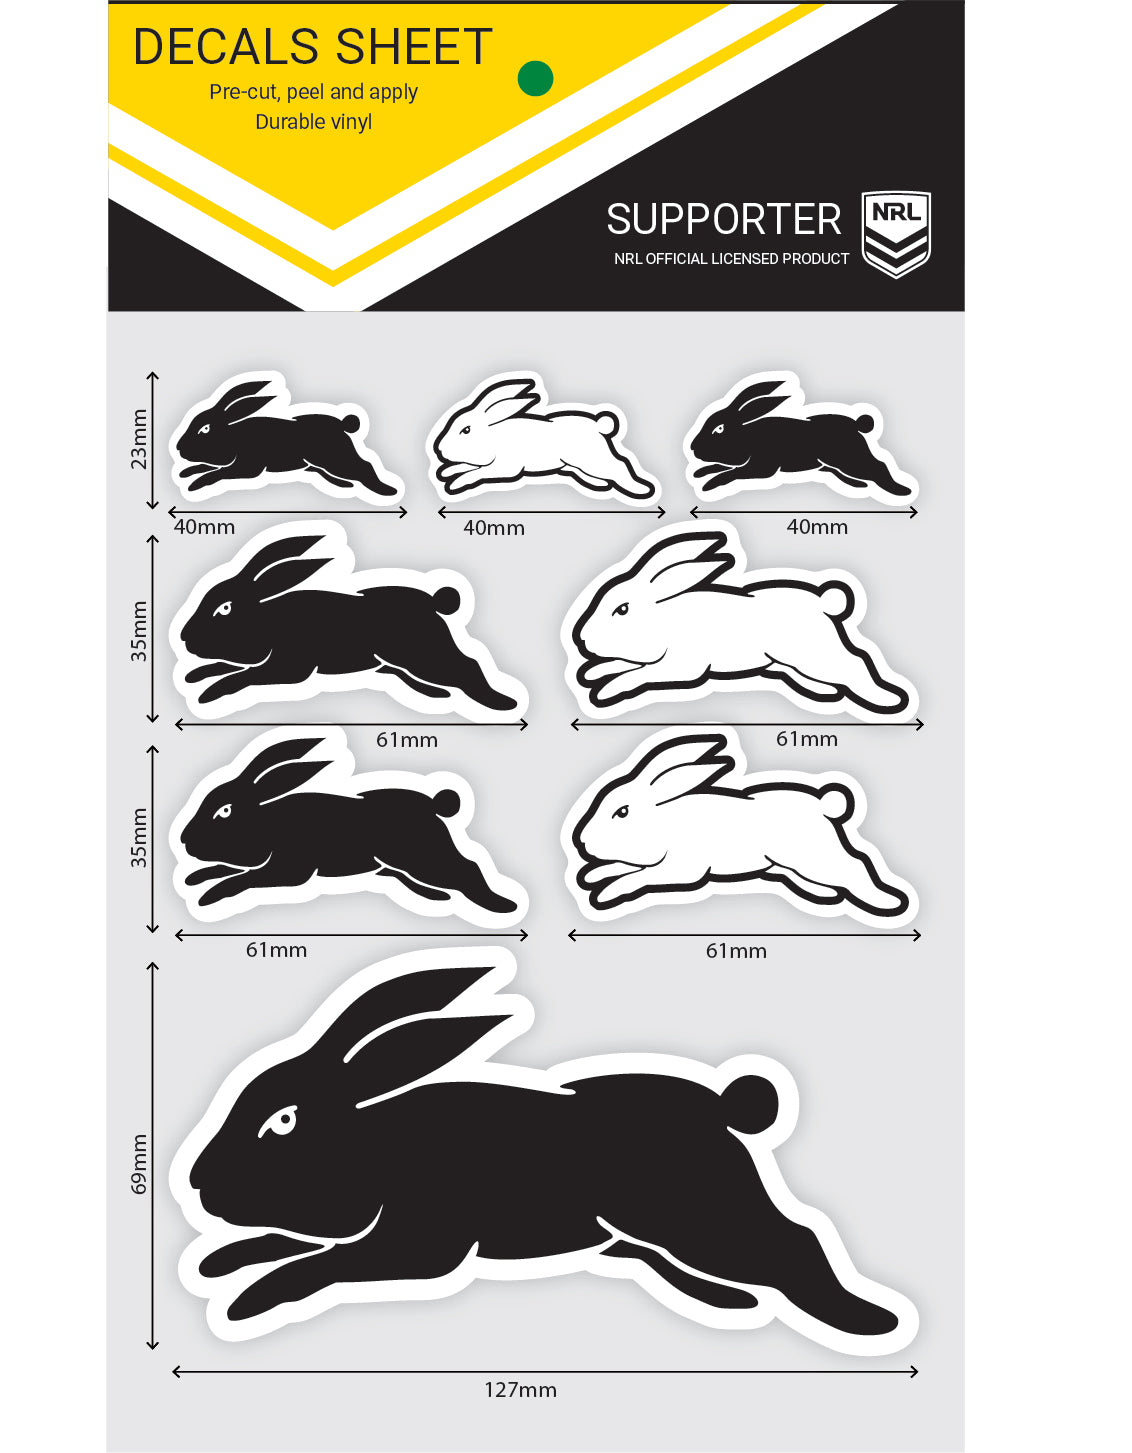 Rabbitohs Decals Sheet